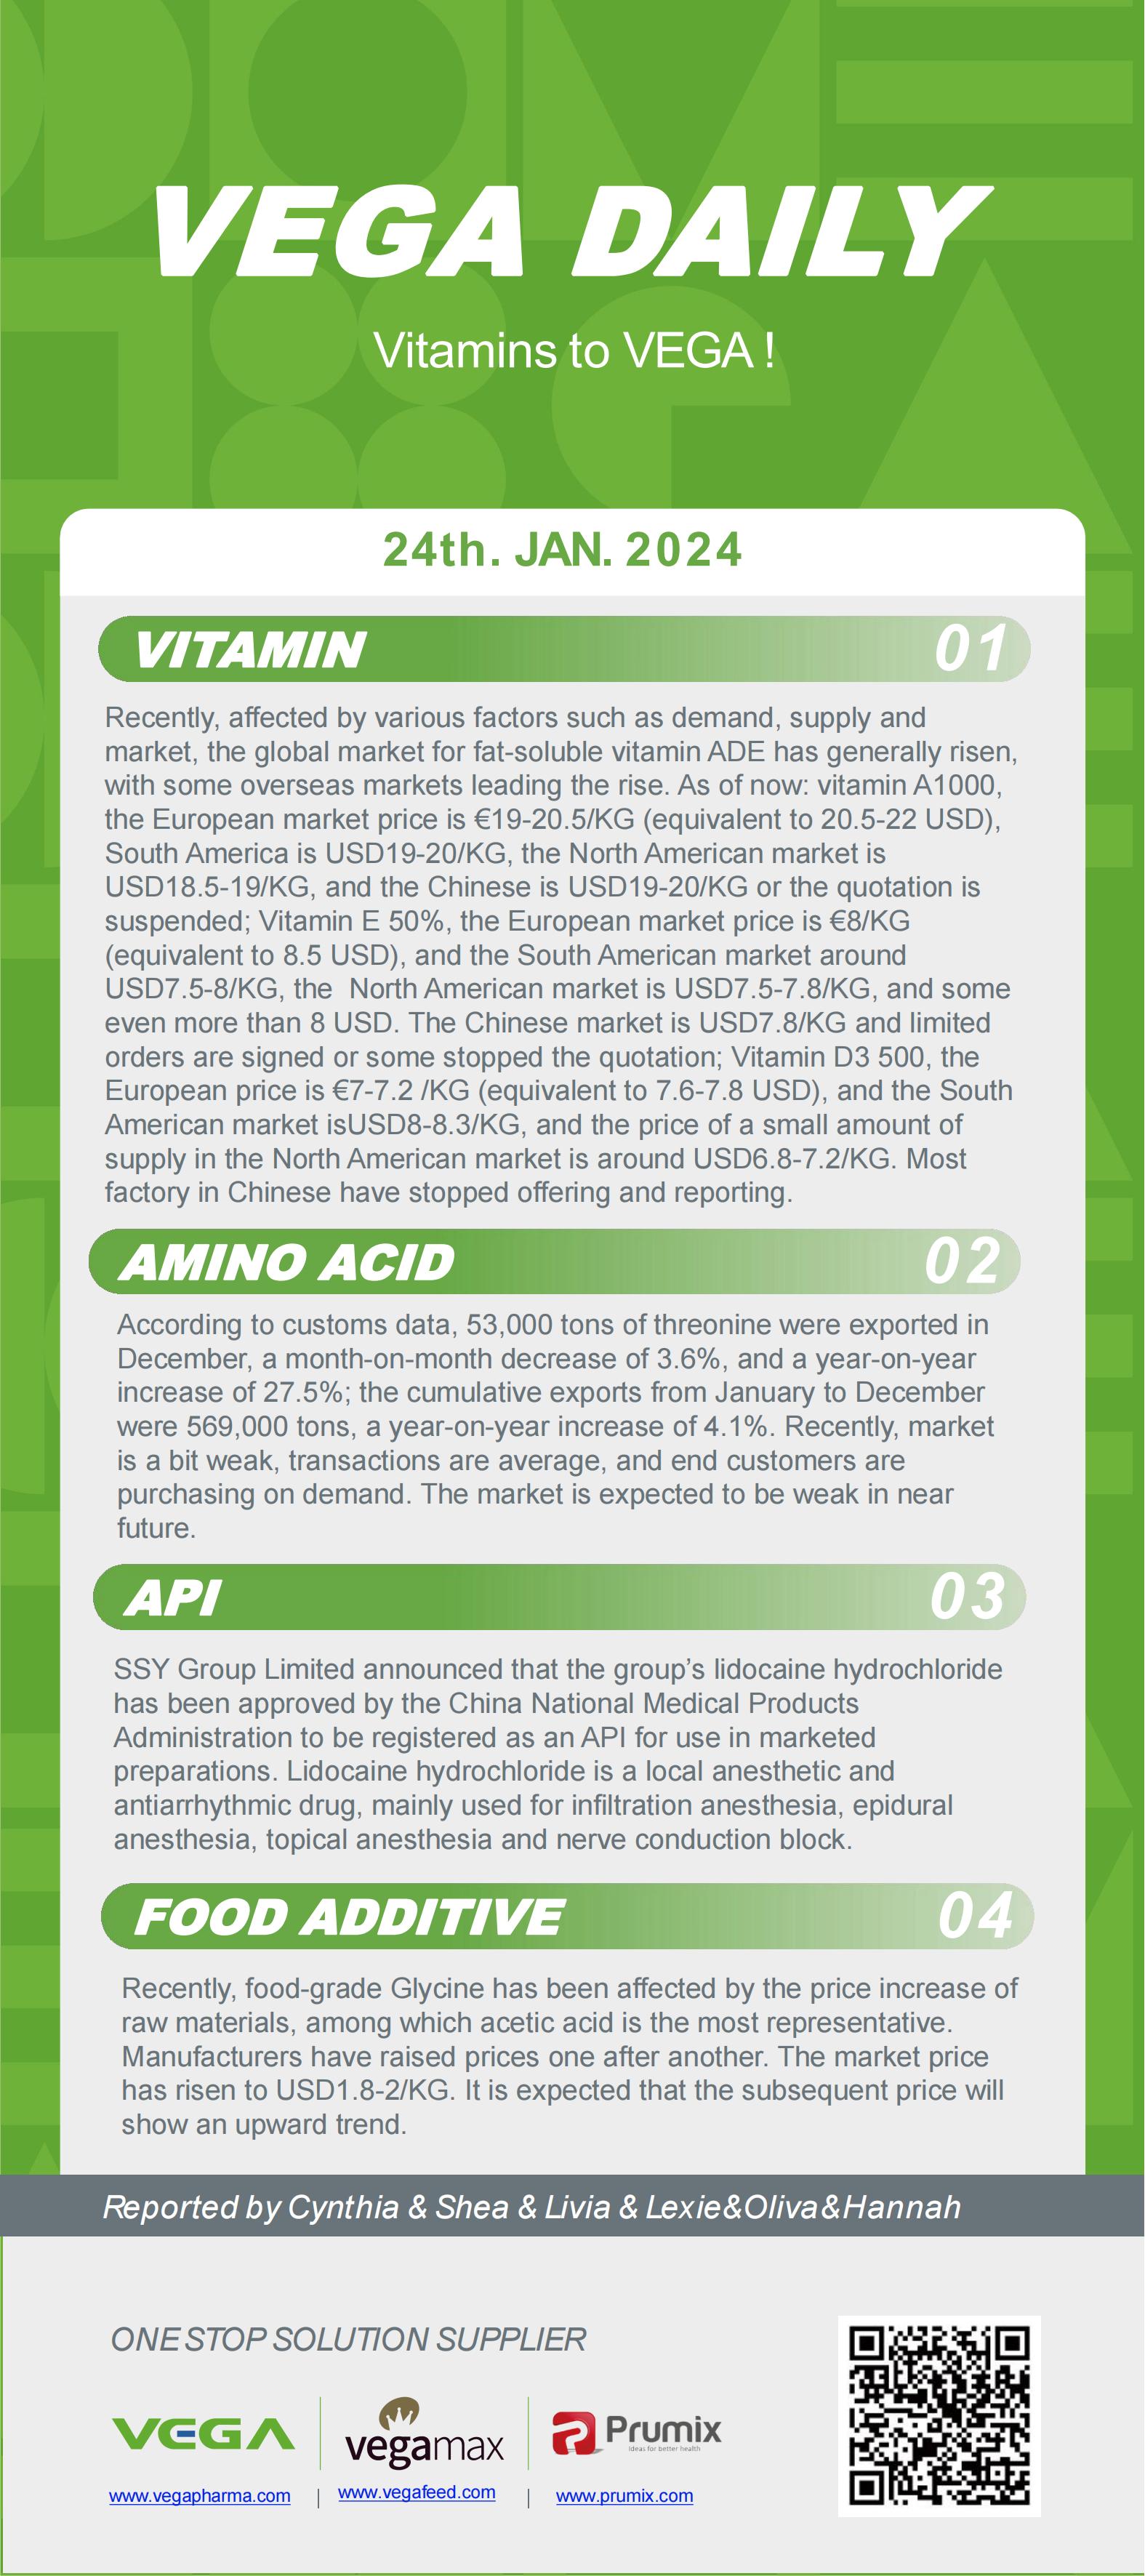 Vega Daily Dated on Jan 24th 2024 Vitamin Amino Acid APl Food Additives.jpg